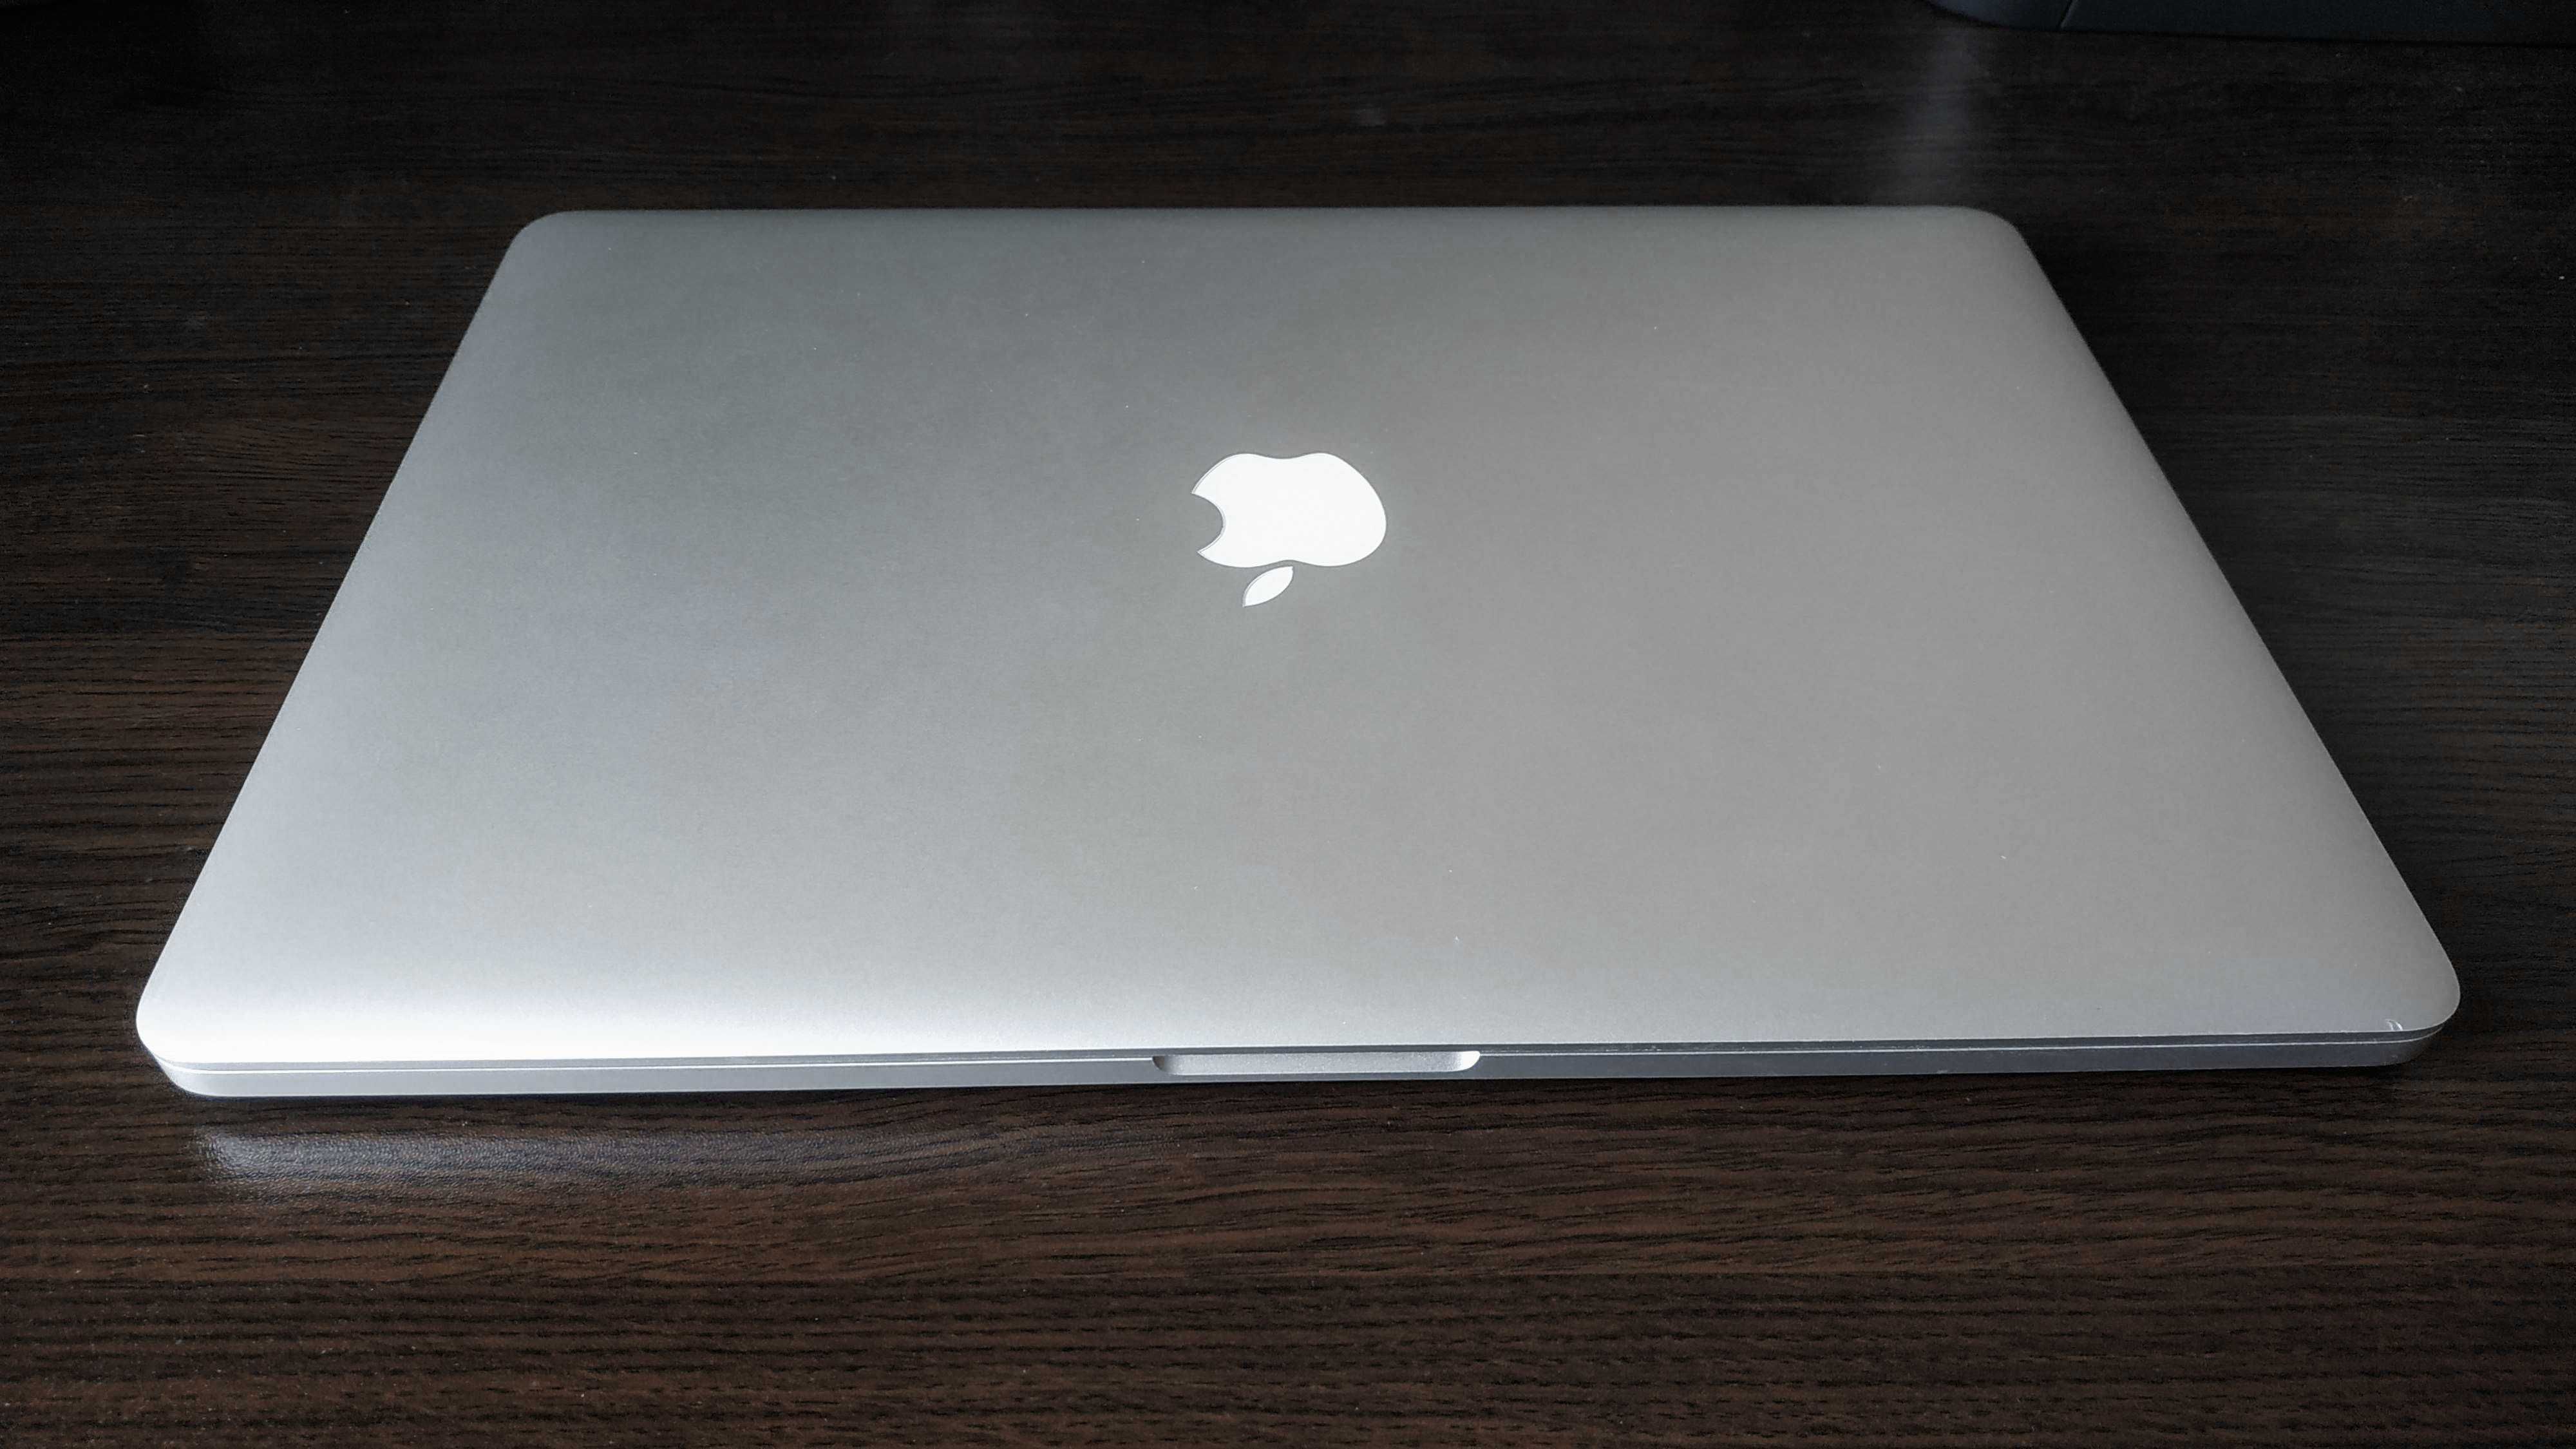 MacBook Pro 15", mid 2014